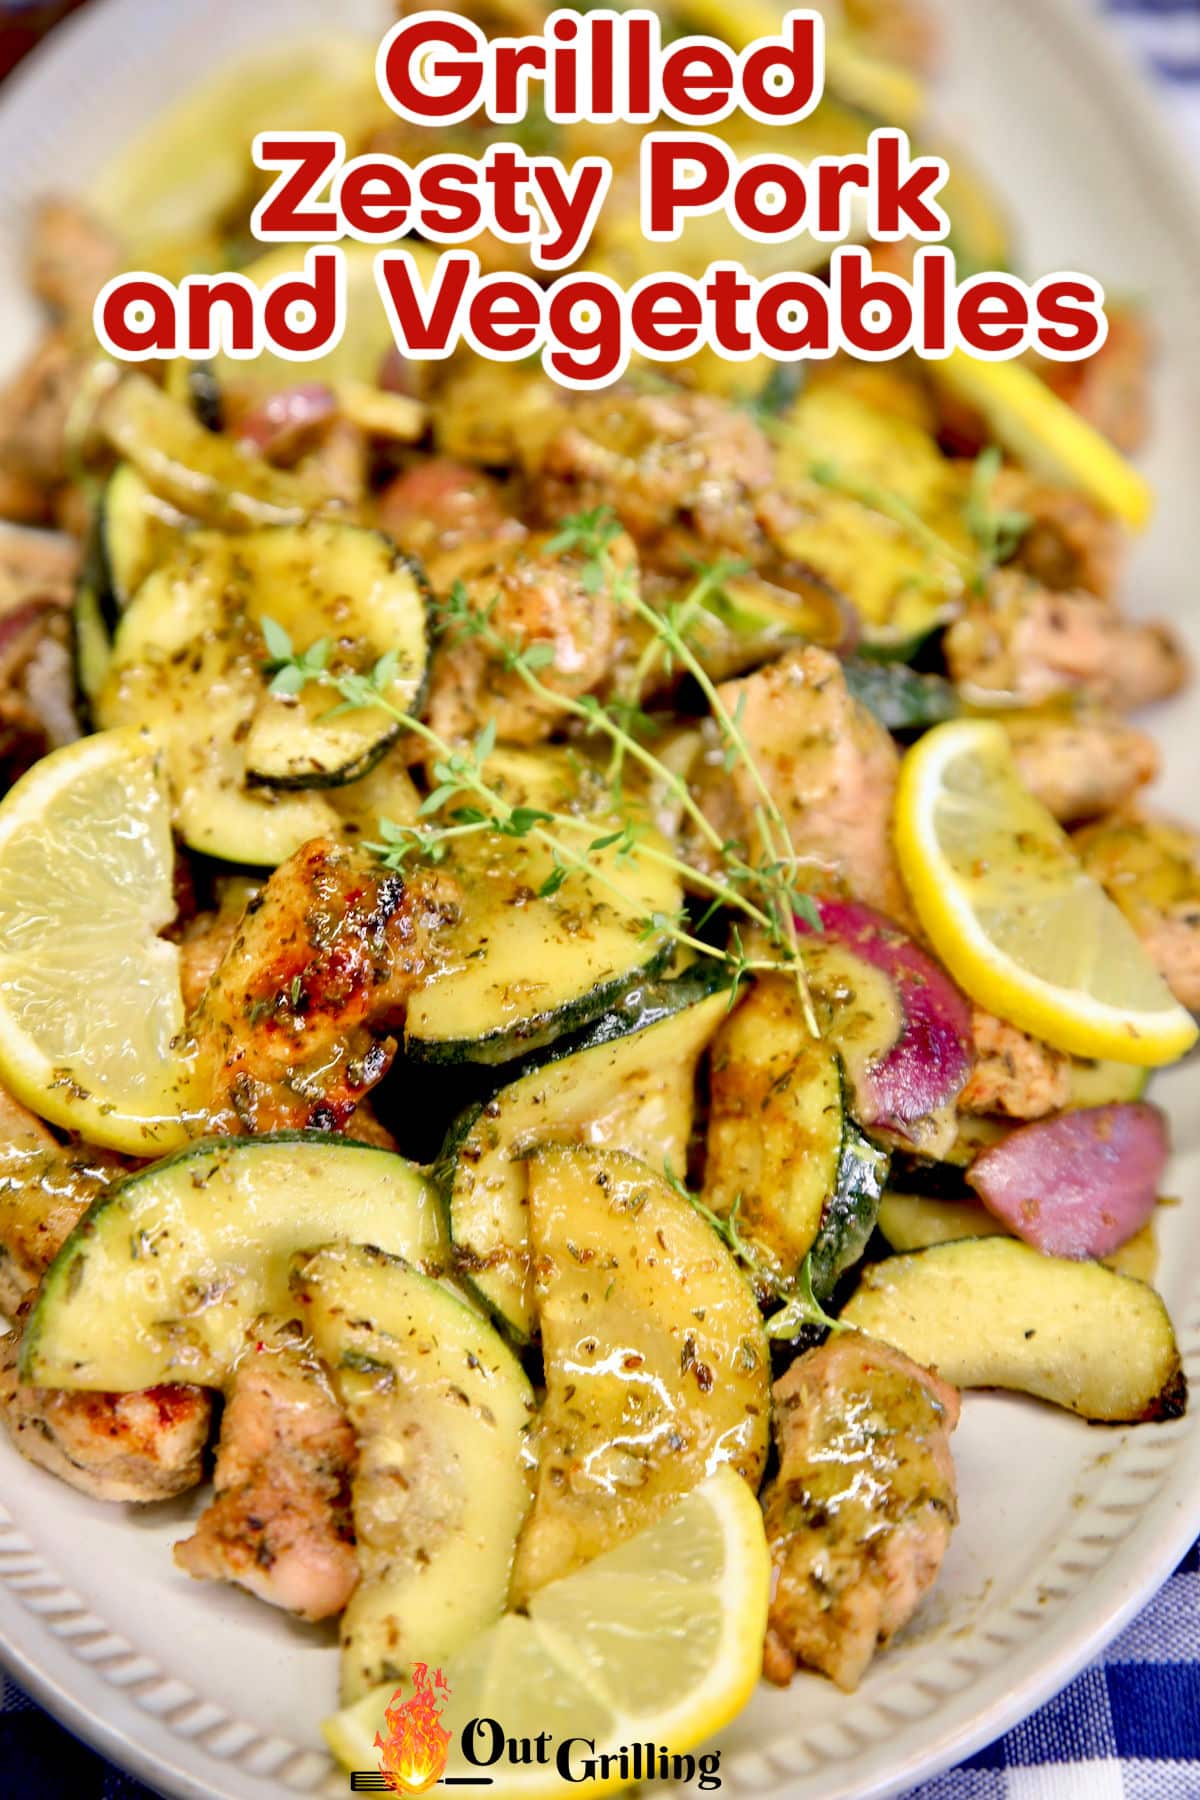 Zesty Pork and Vegetables - Out Grilling